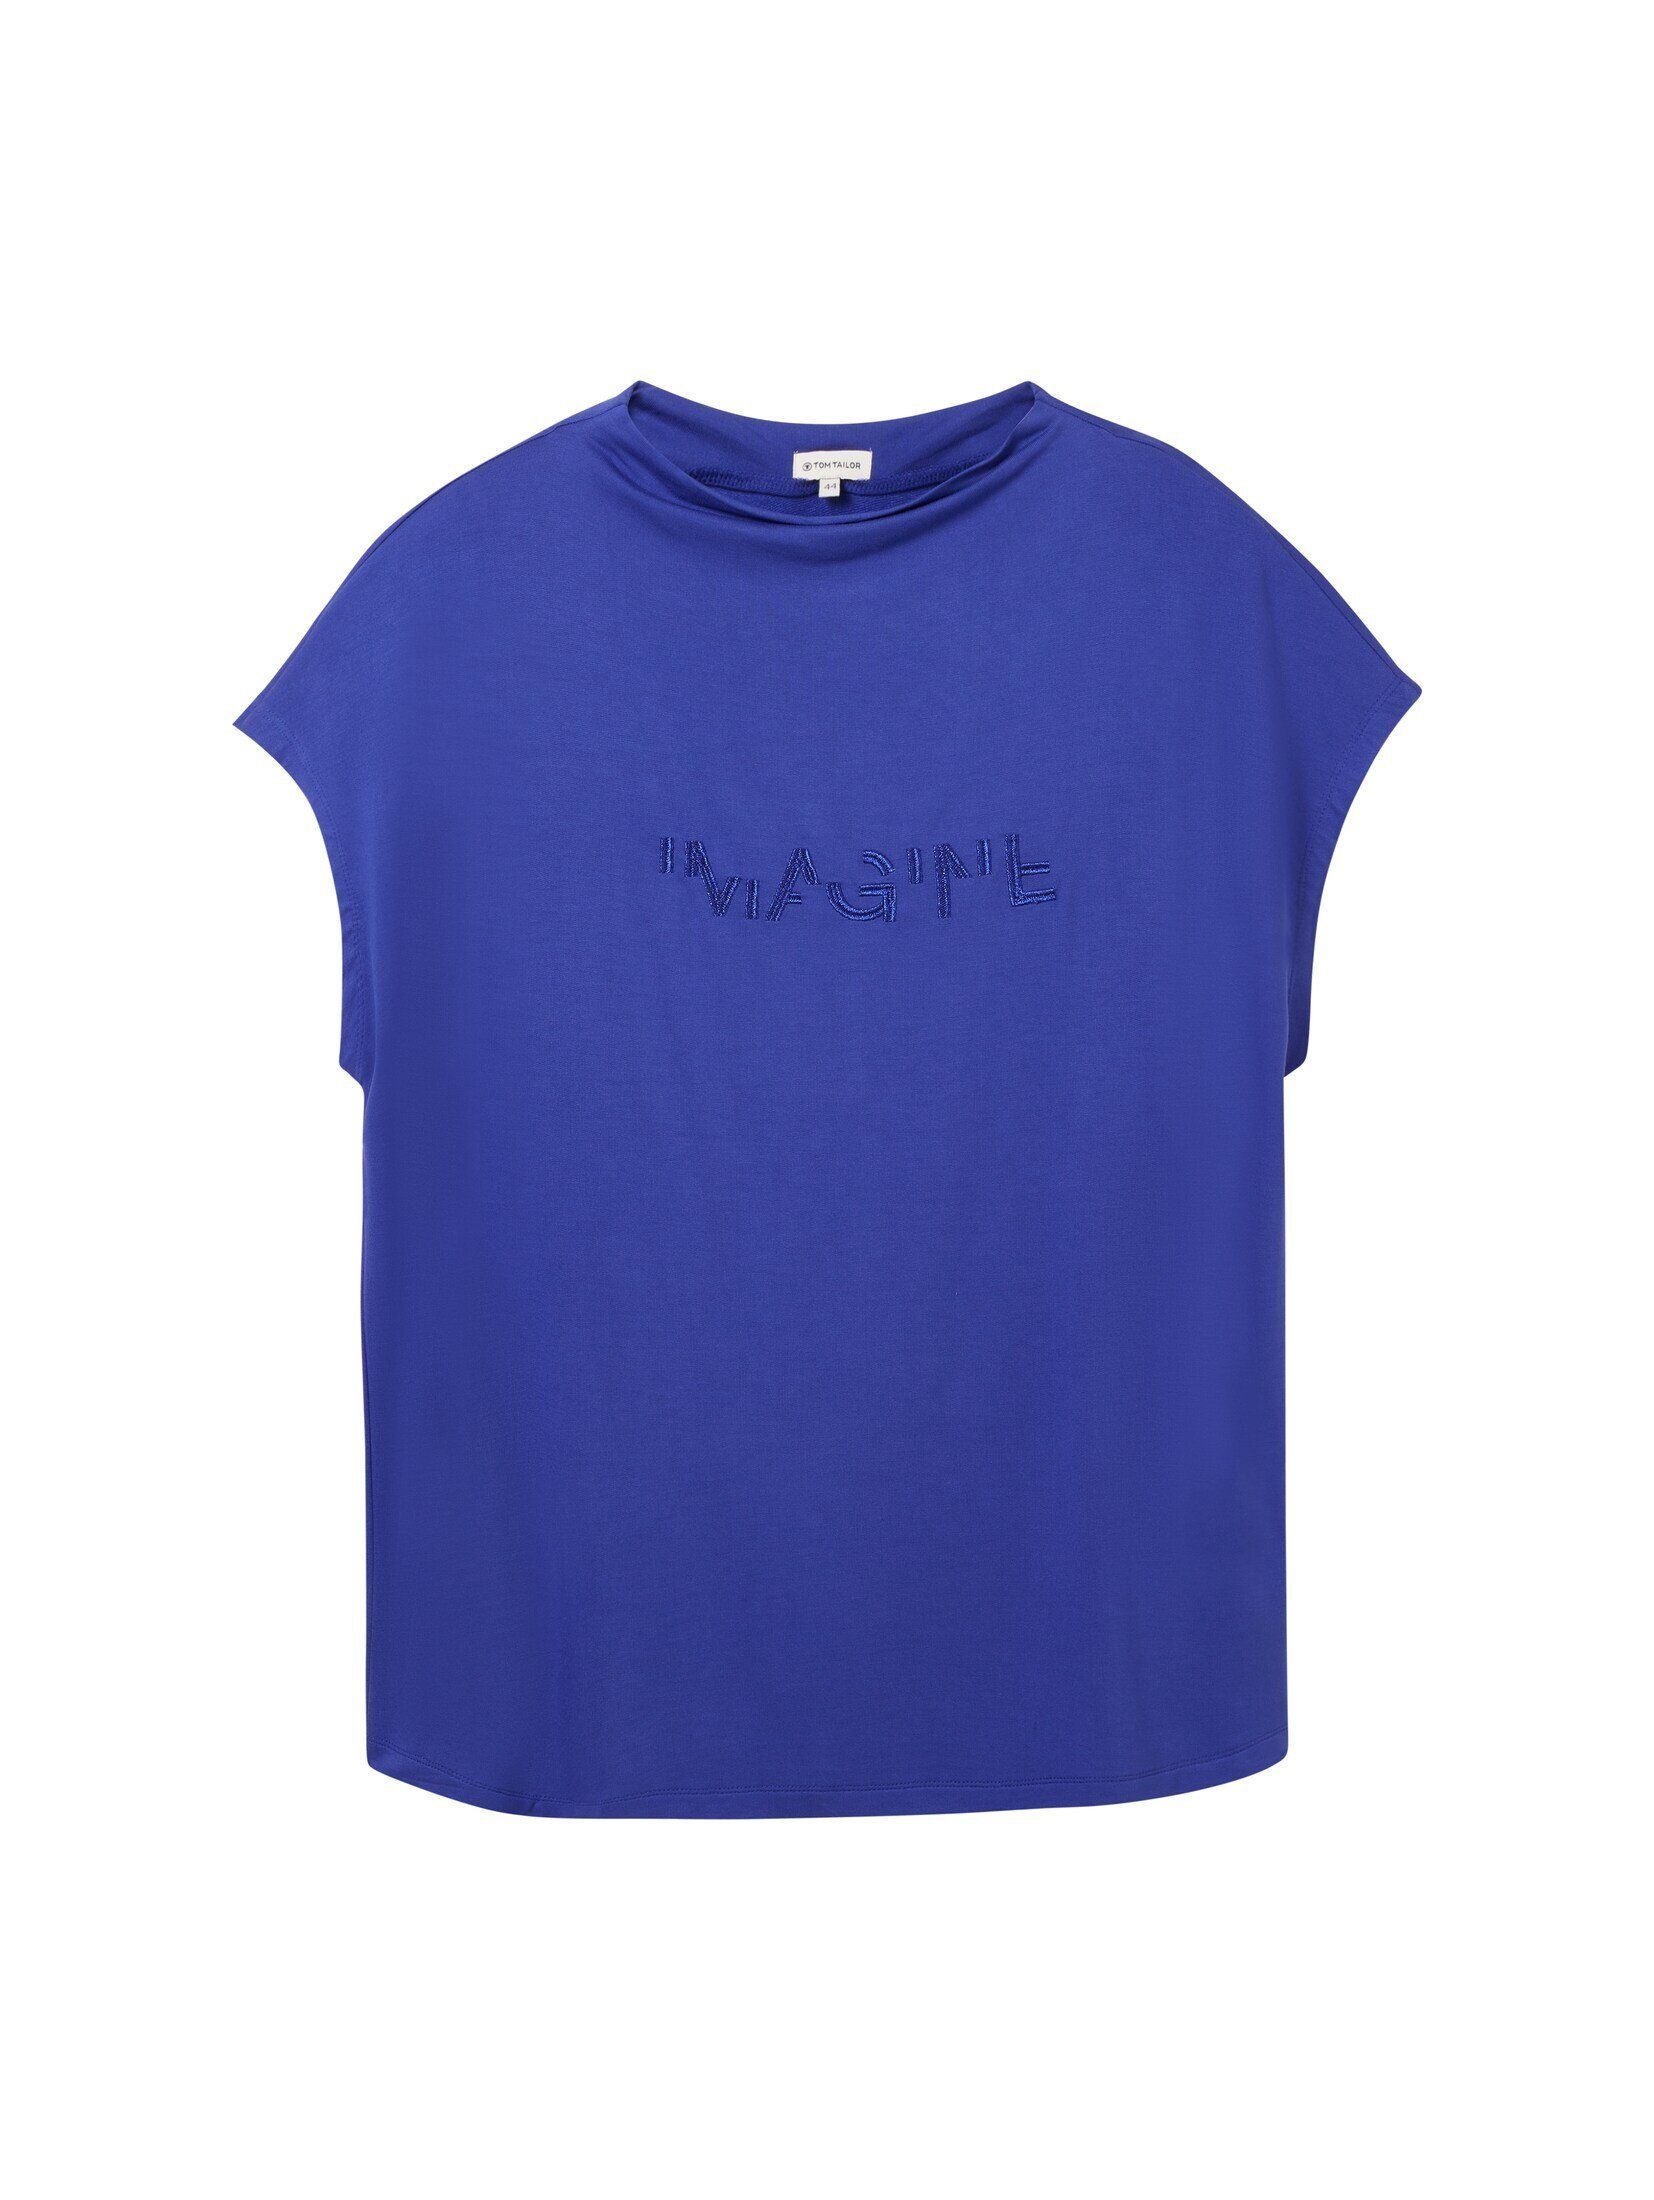 mit PLUS TOM T-Shirt crest T-Shirt TAILOR - Plus Stehkragen blue